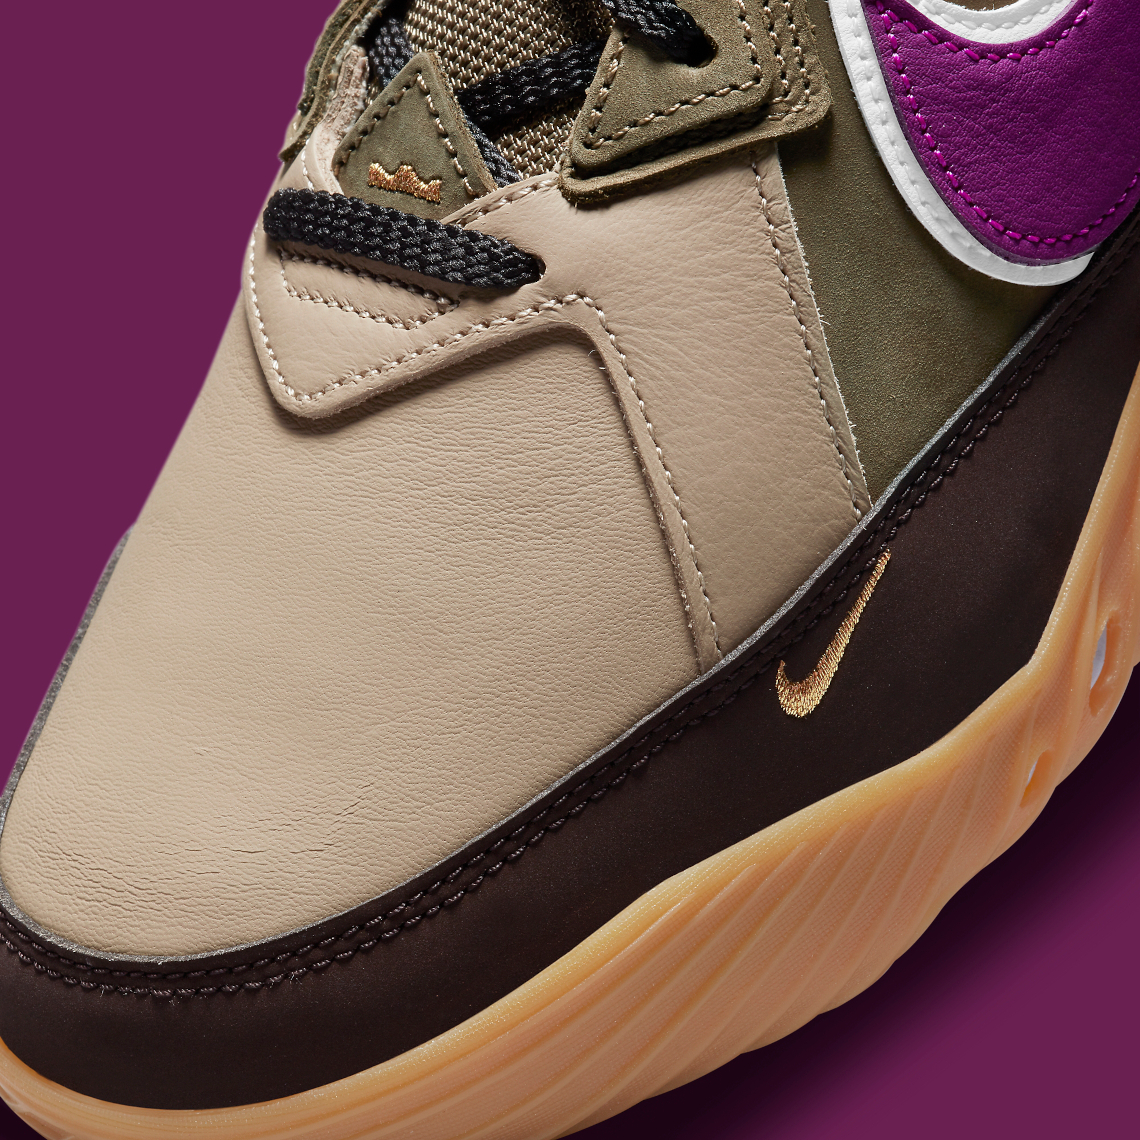 atmos Nike LeBron 18 Low Viotech CW3153-200 | SneakerNews.com